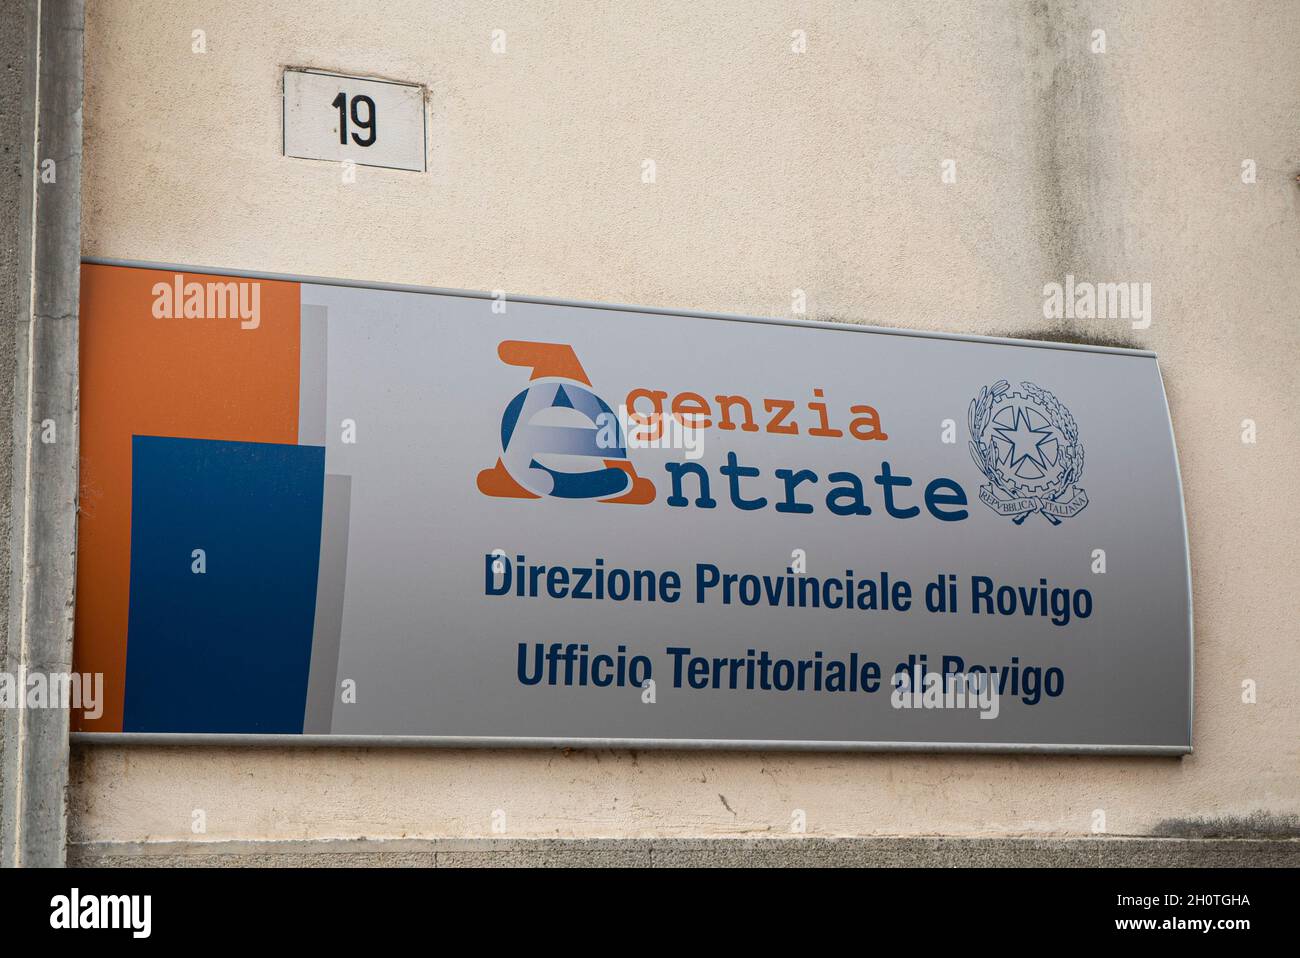 ROVIGO, ITALIE 14 OCTOBRE 2021: Agence delle entrate signe, Agence fiscale en Italie signe en anglais Banque D'Images